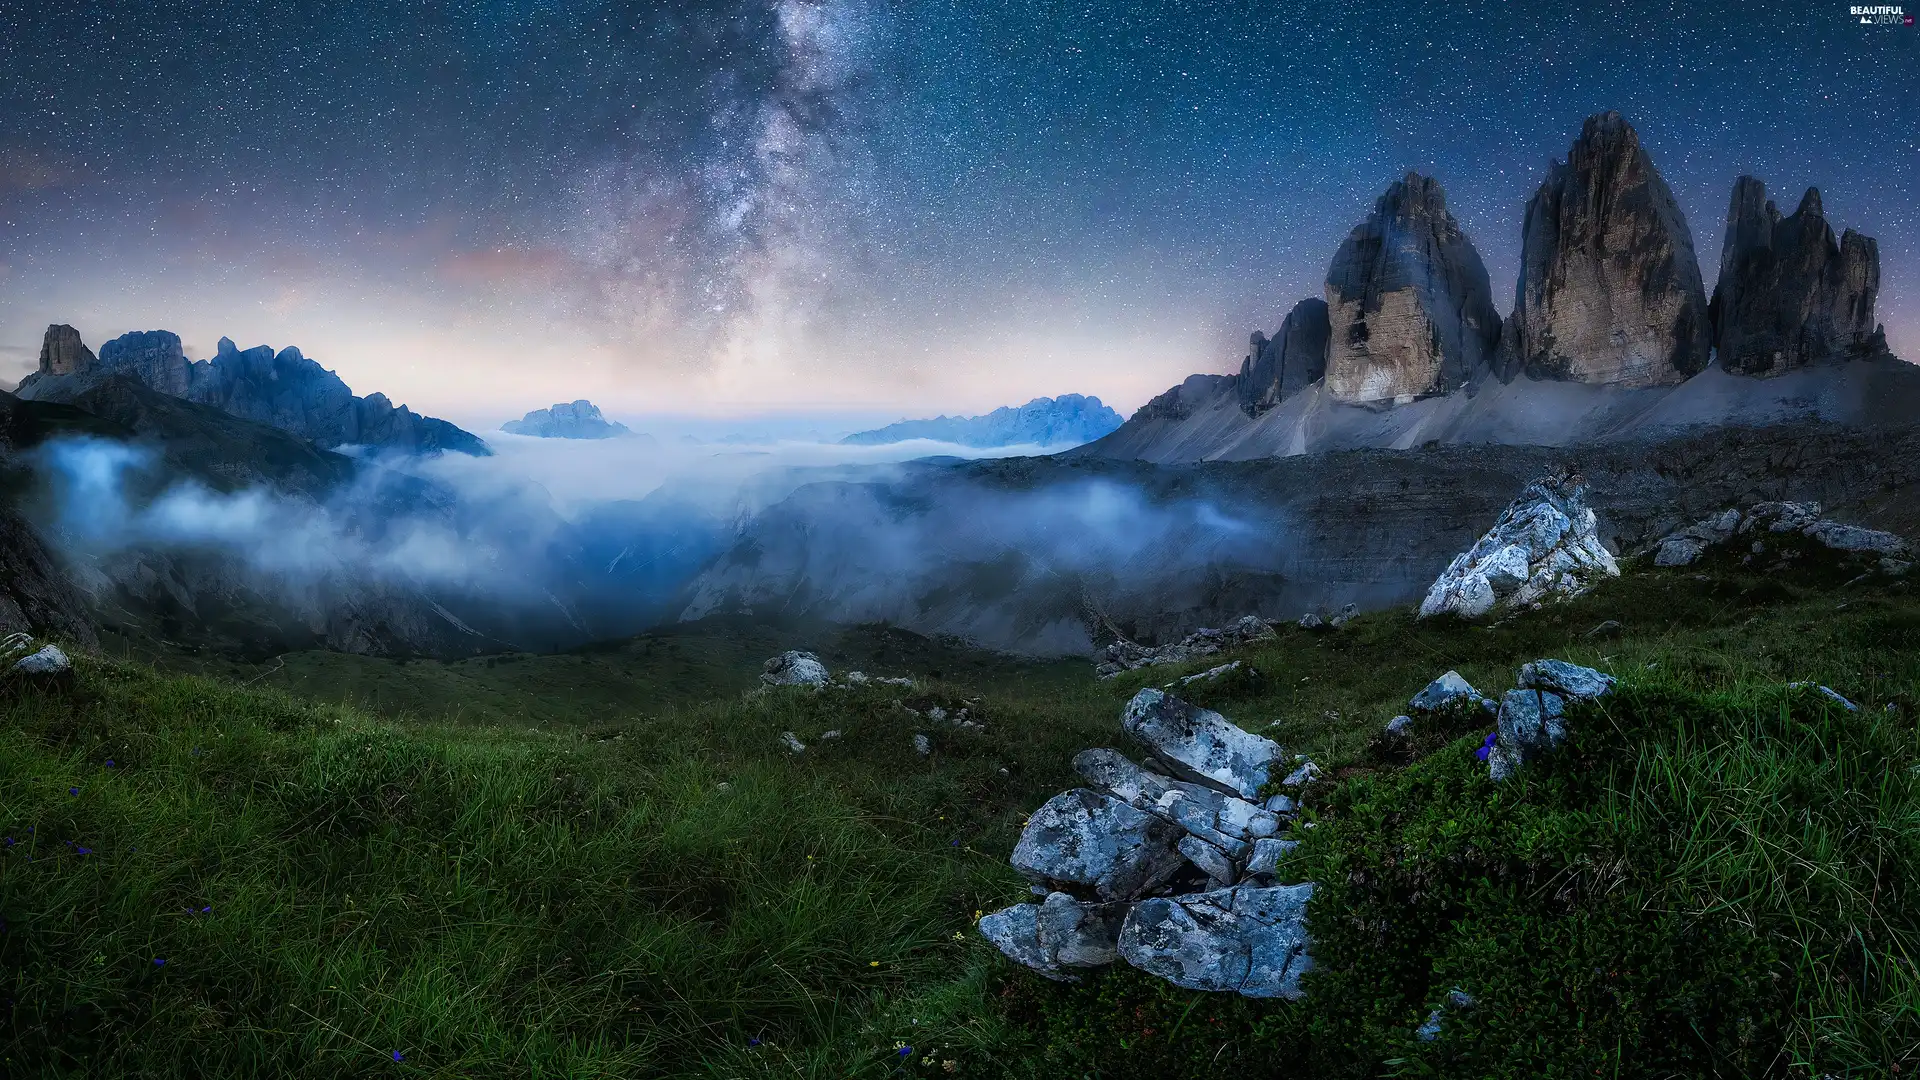 Dolomites, Mountains, rocks, grass, star, Italy, Night, Star way, Stones